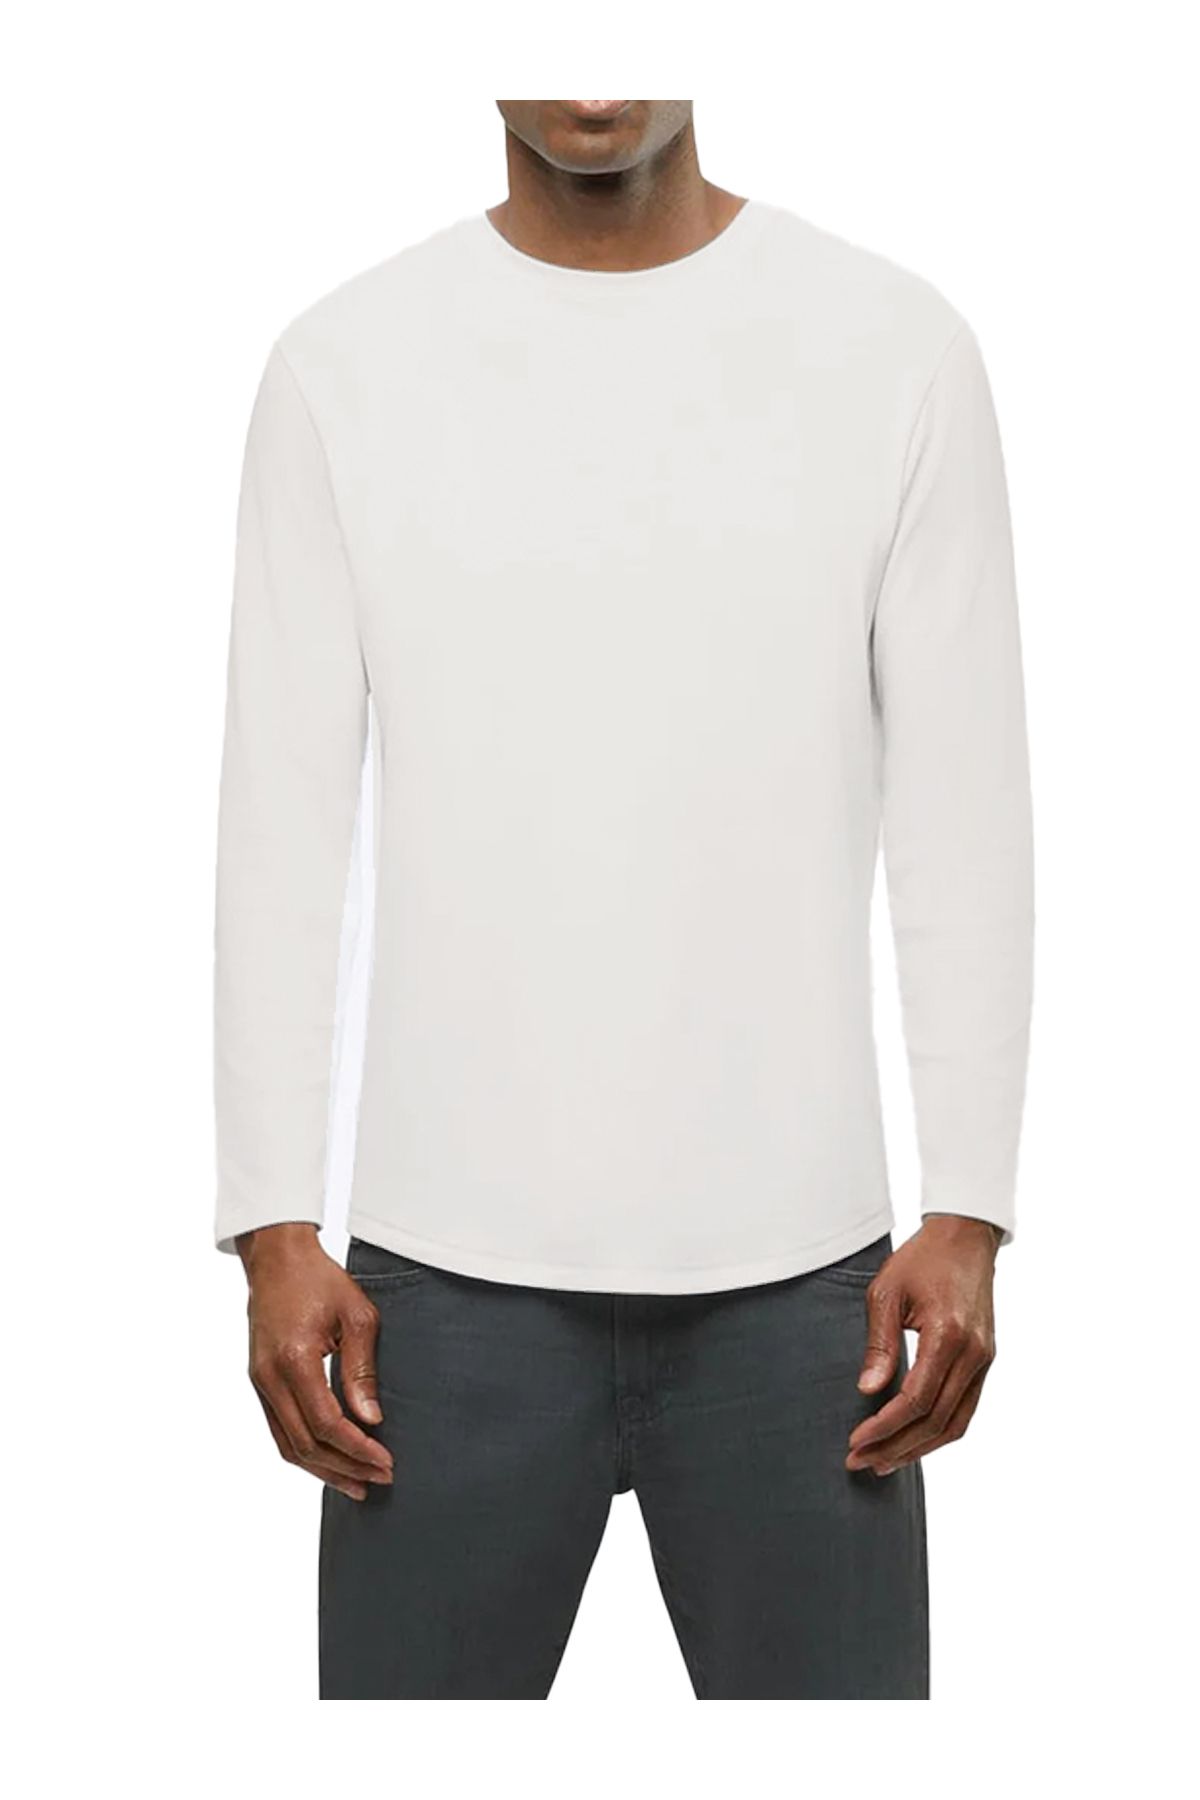 QMARI Beyaz Uzun Kollu Bisiklet Yaka Erkek Basic Tişört | Oval Kesim Regular Fit Lıkrali T-shirt